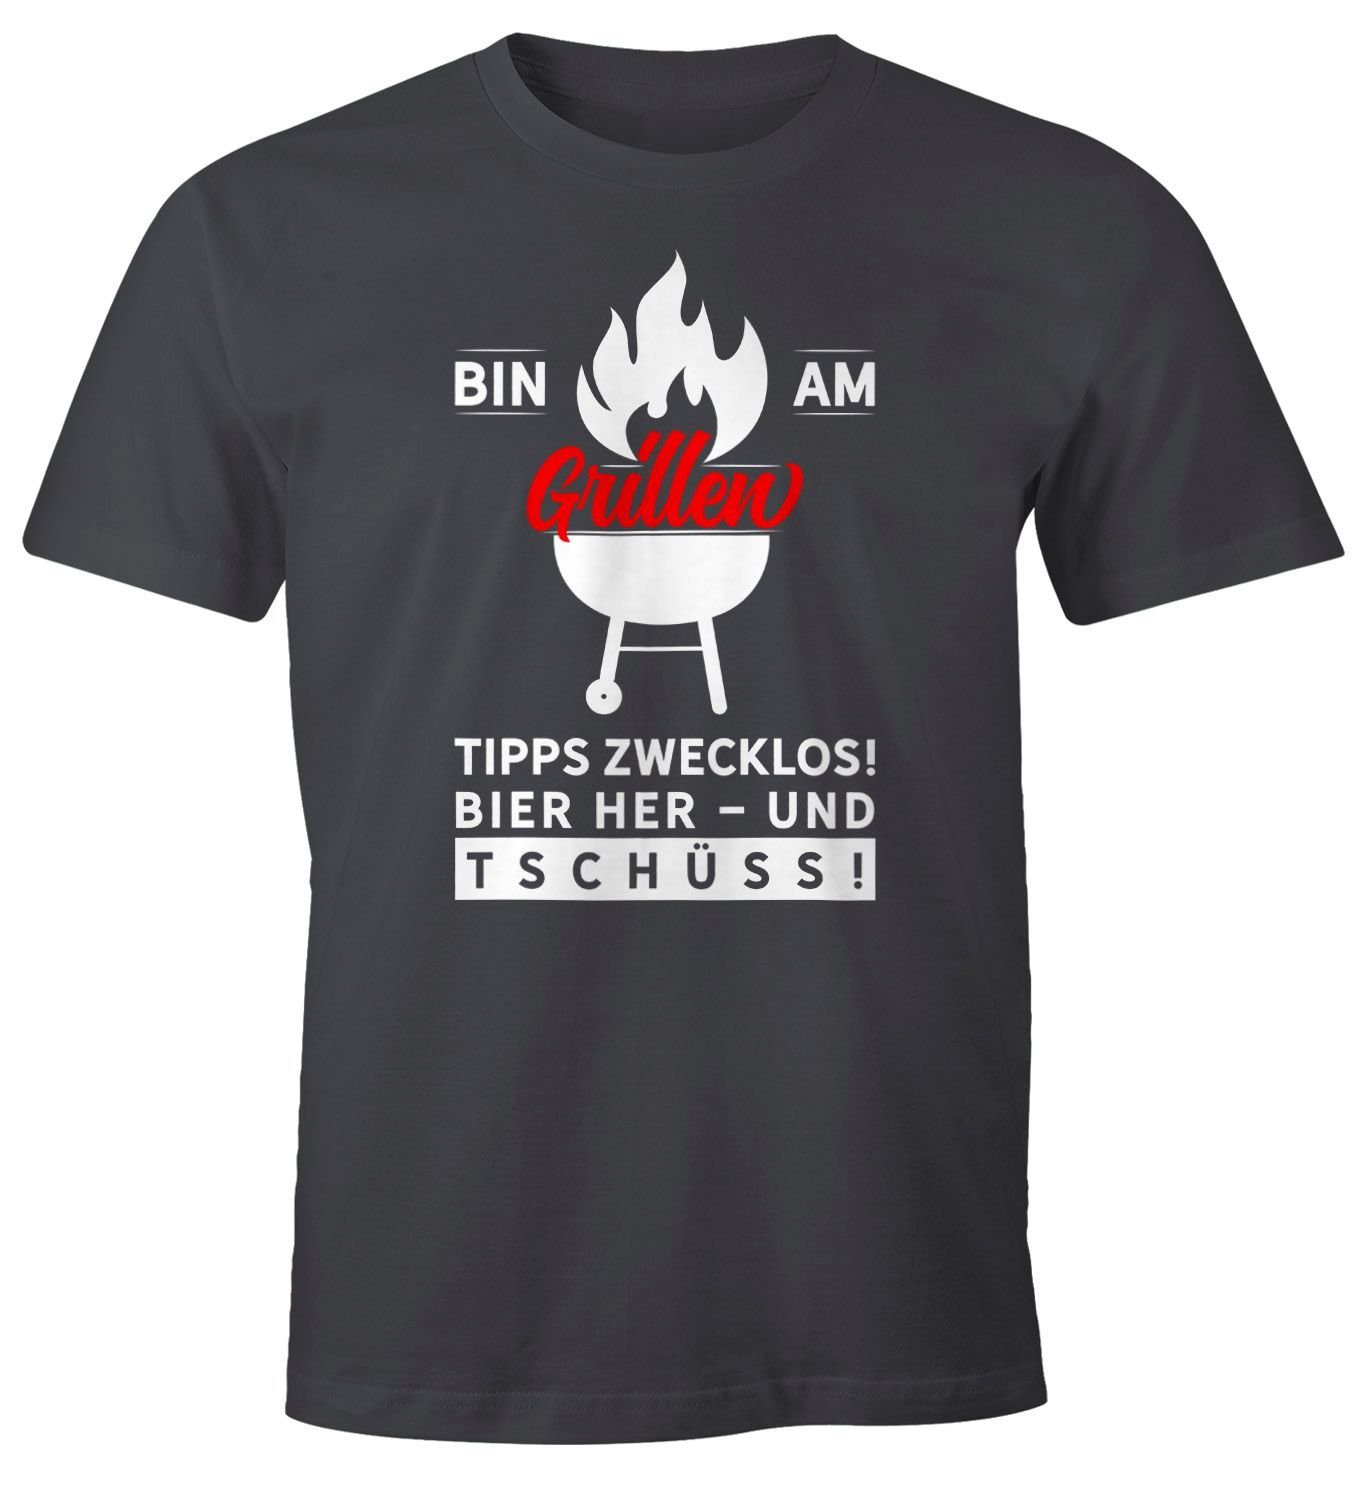 MoonWorks Print-Shirt Herren T-Shirt Bin am Grillen Fun-Shirt Spruch-Shirt Foodie Barbecue BBQ Tee Bier Moonworks® mit Print grau